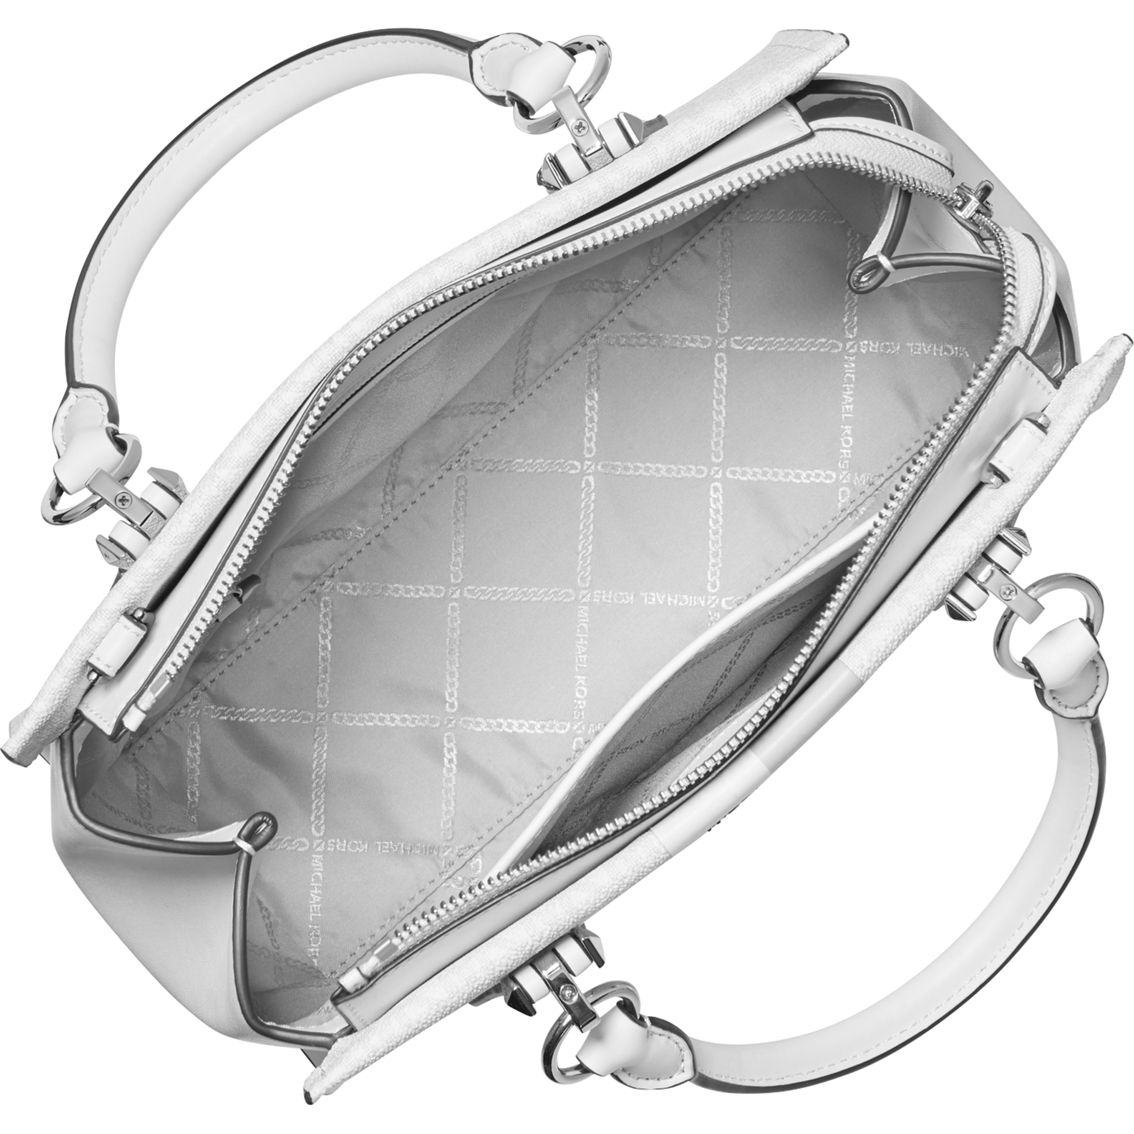 Michael Kors Optic White Aluminum Marilyn Medium Satchel - Image 3 of 4